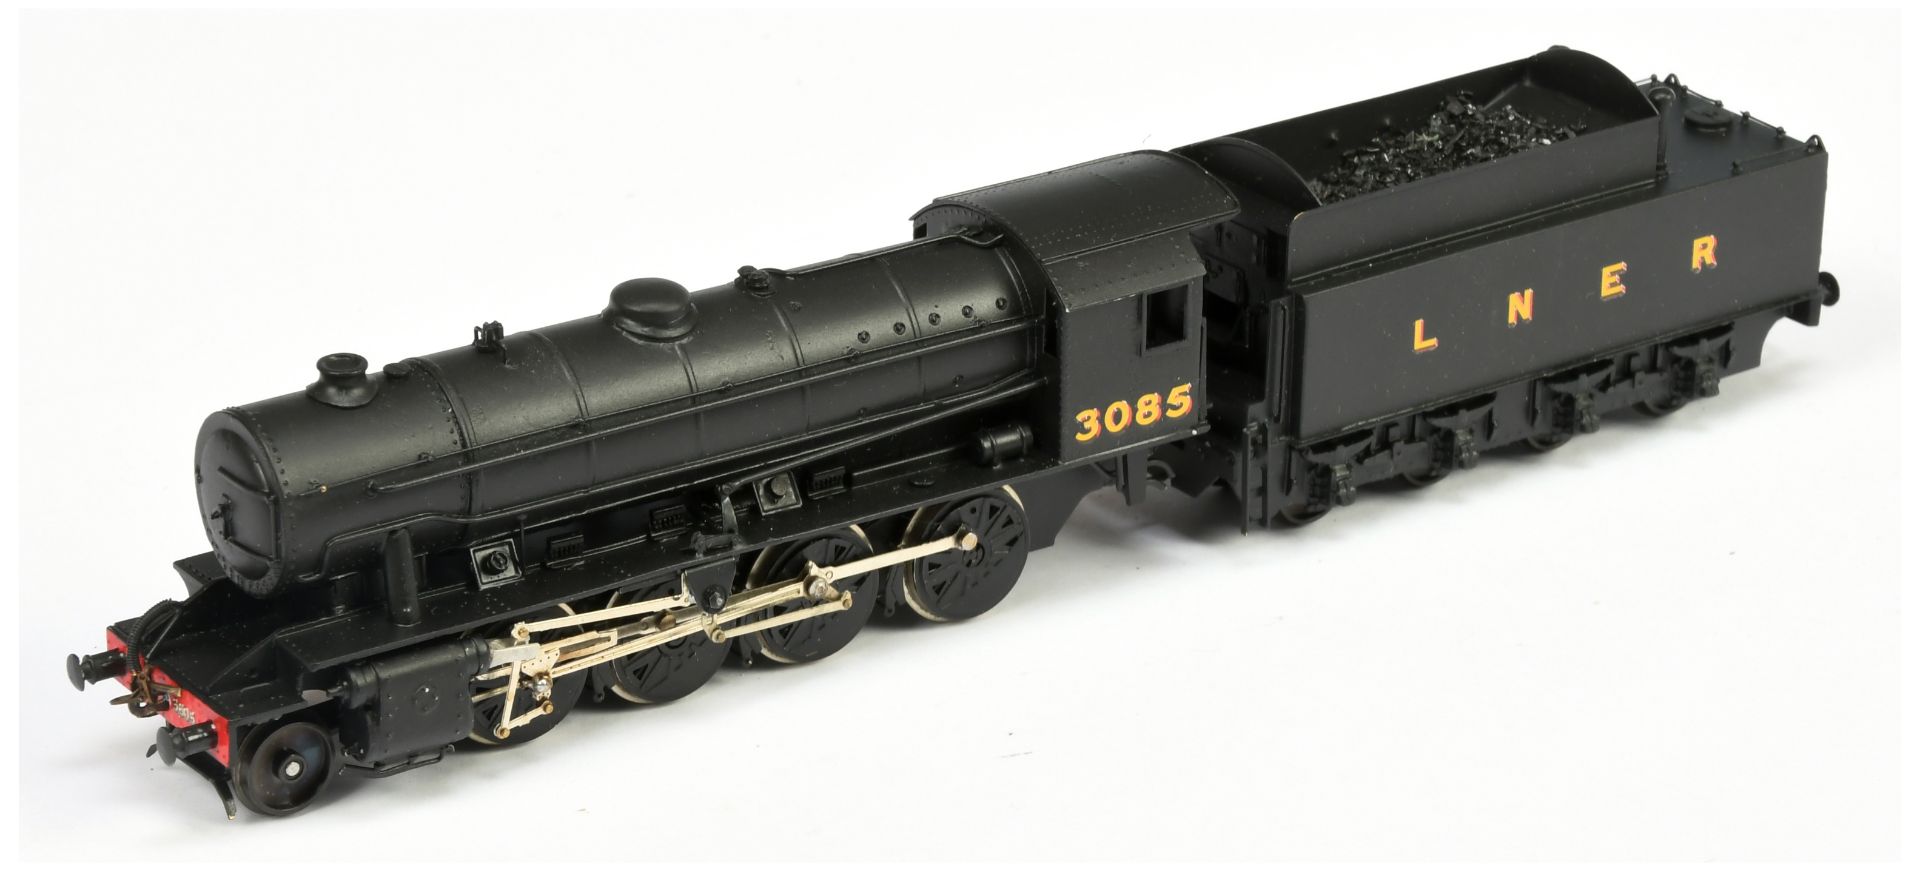 DJH OO Gauge Kitbuilt K38 2-8-0 LNER unlined black WD Austerity Class Steam Locomotive No. 3085